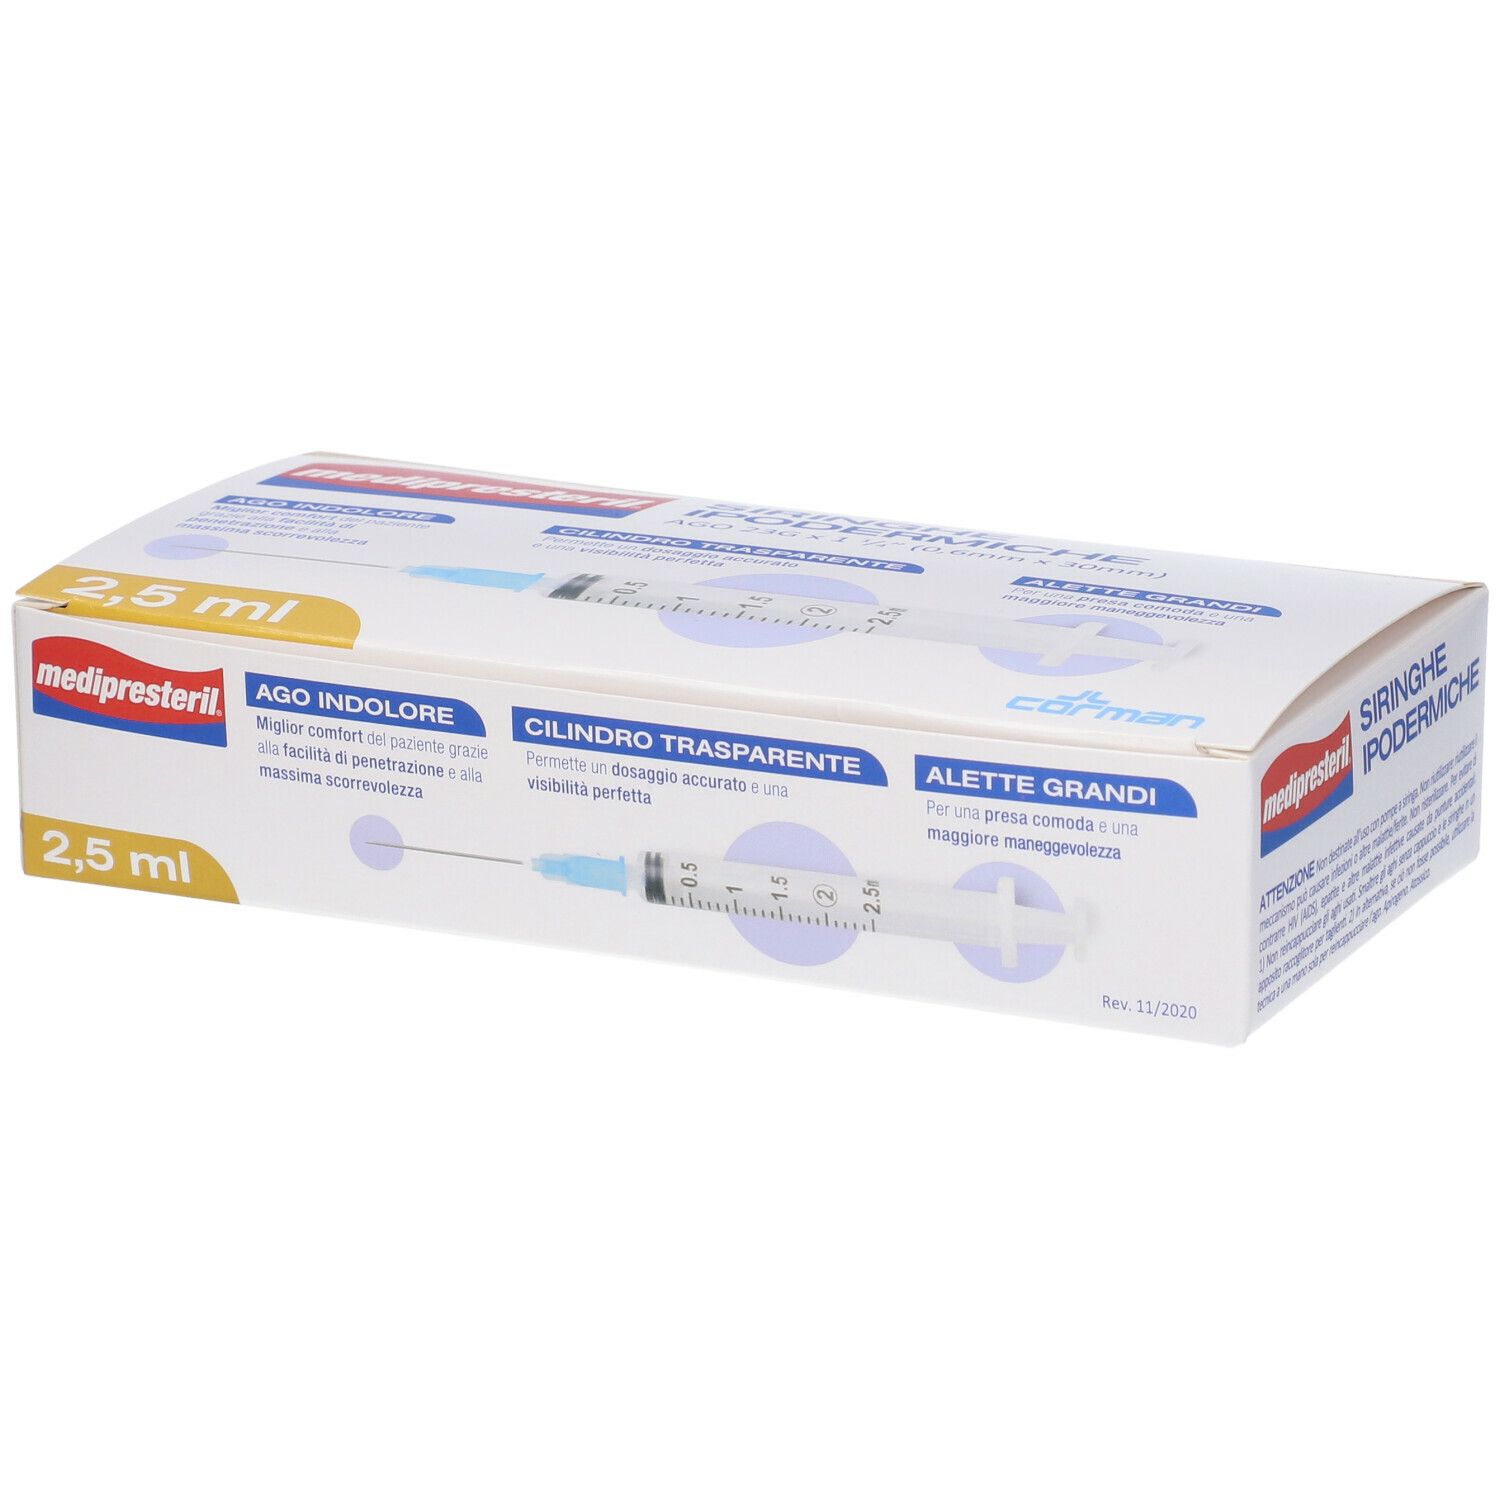 Medipresteril® Siringhe Ipodermiche 2,5 ml